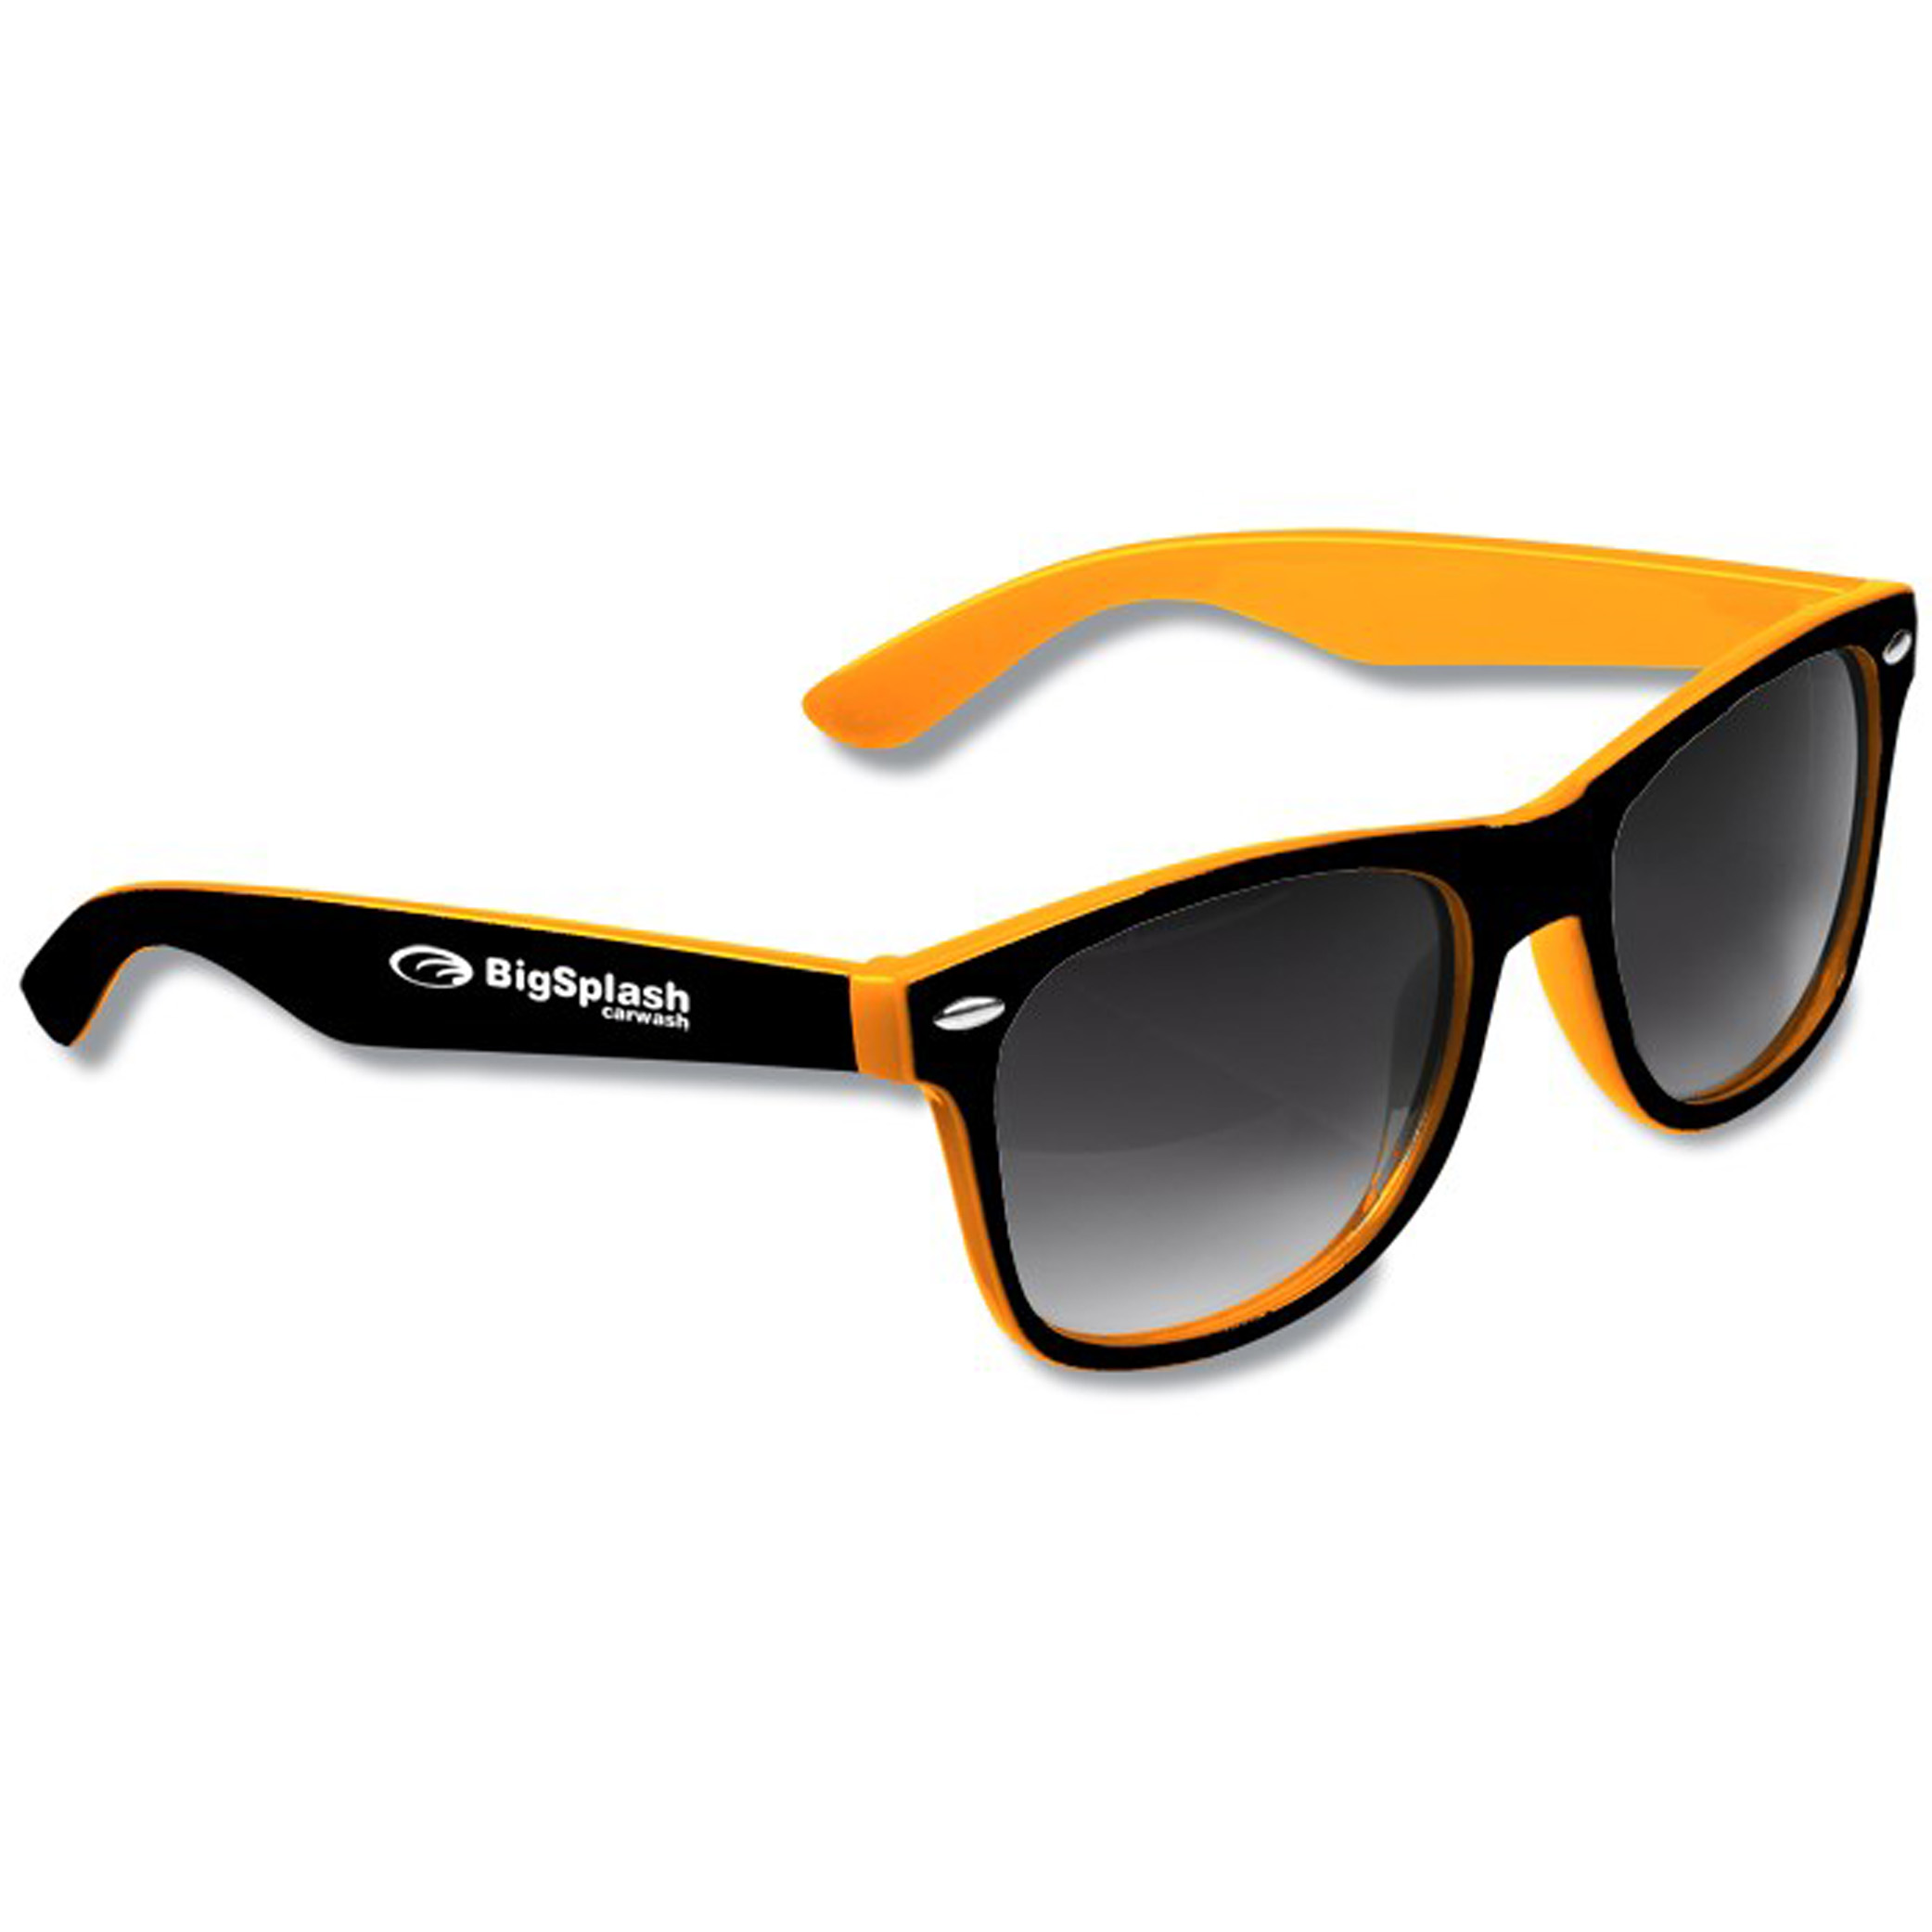 Risky Business Sunglasses - Two ToneRisky Business Sunglasses - Two Tone